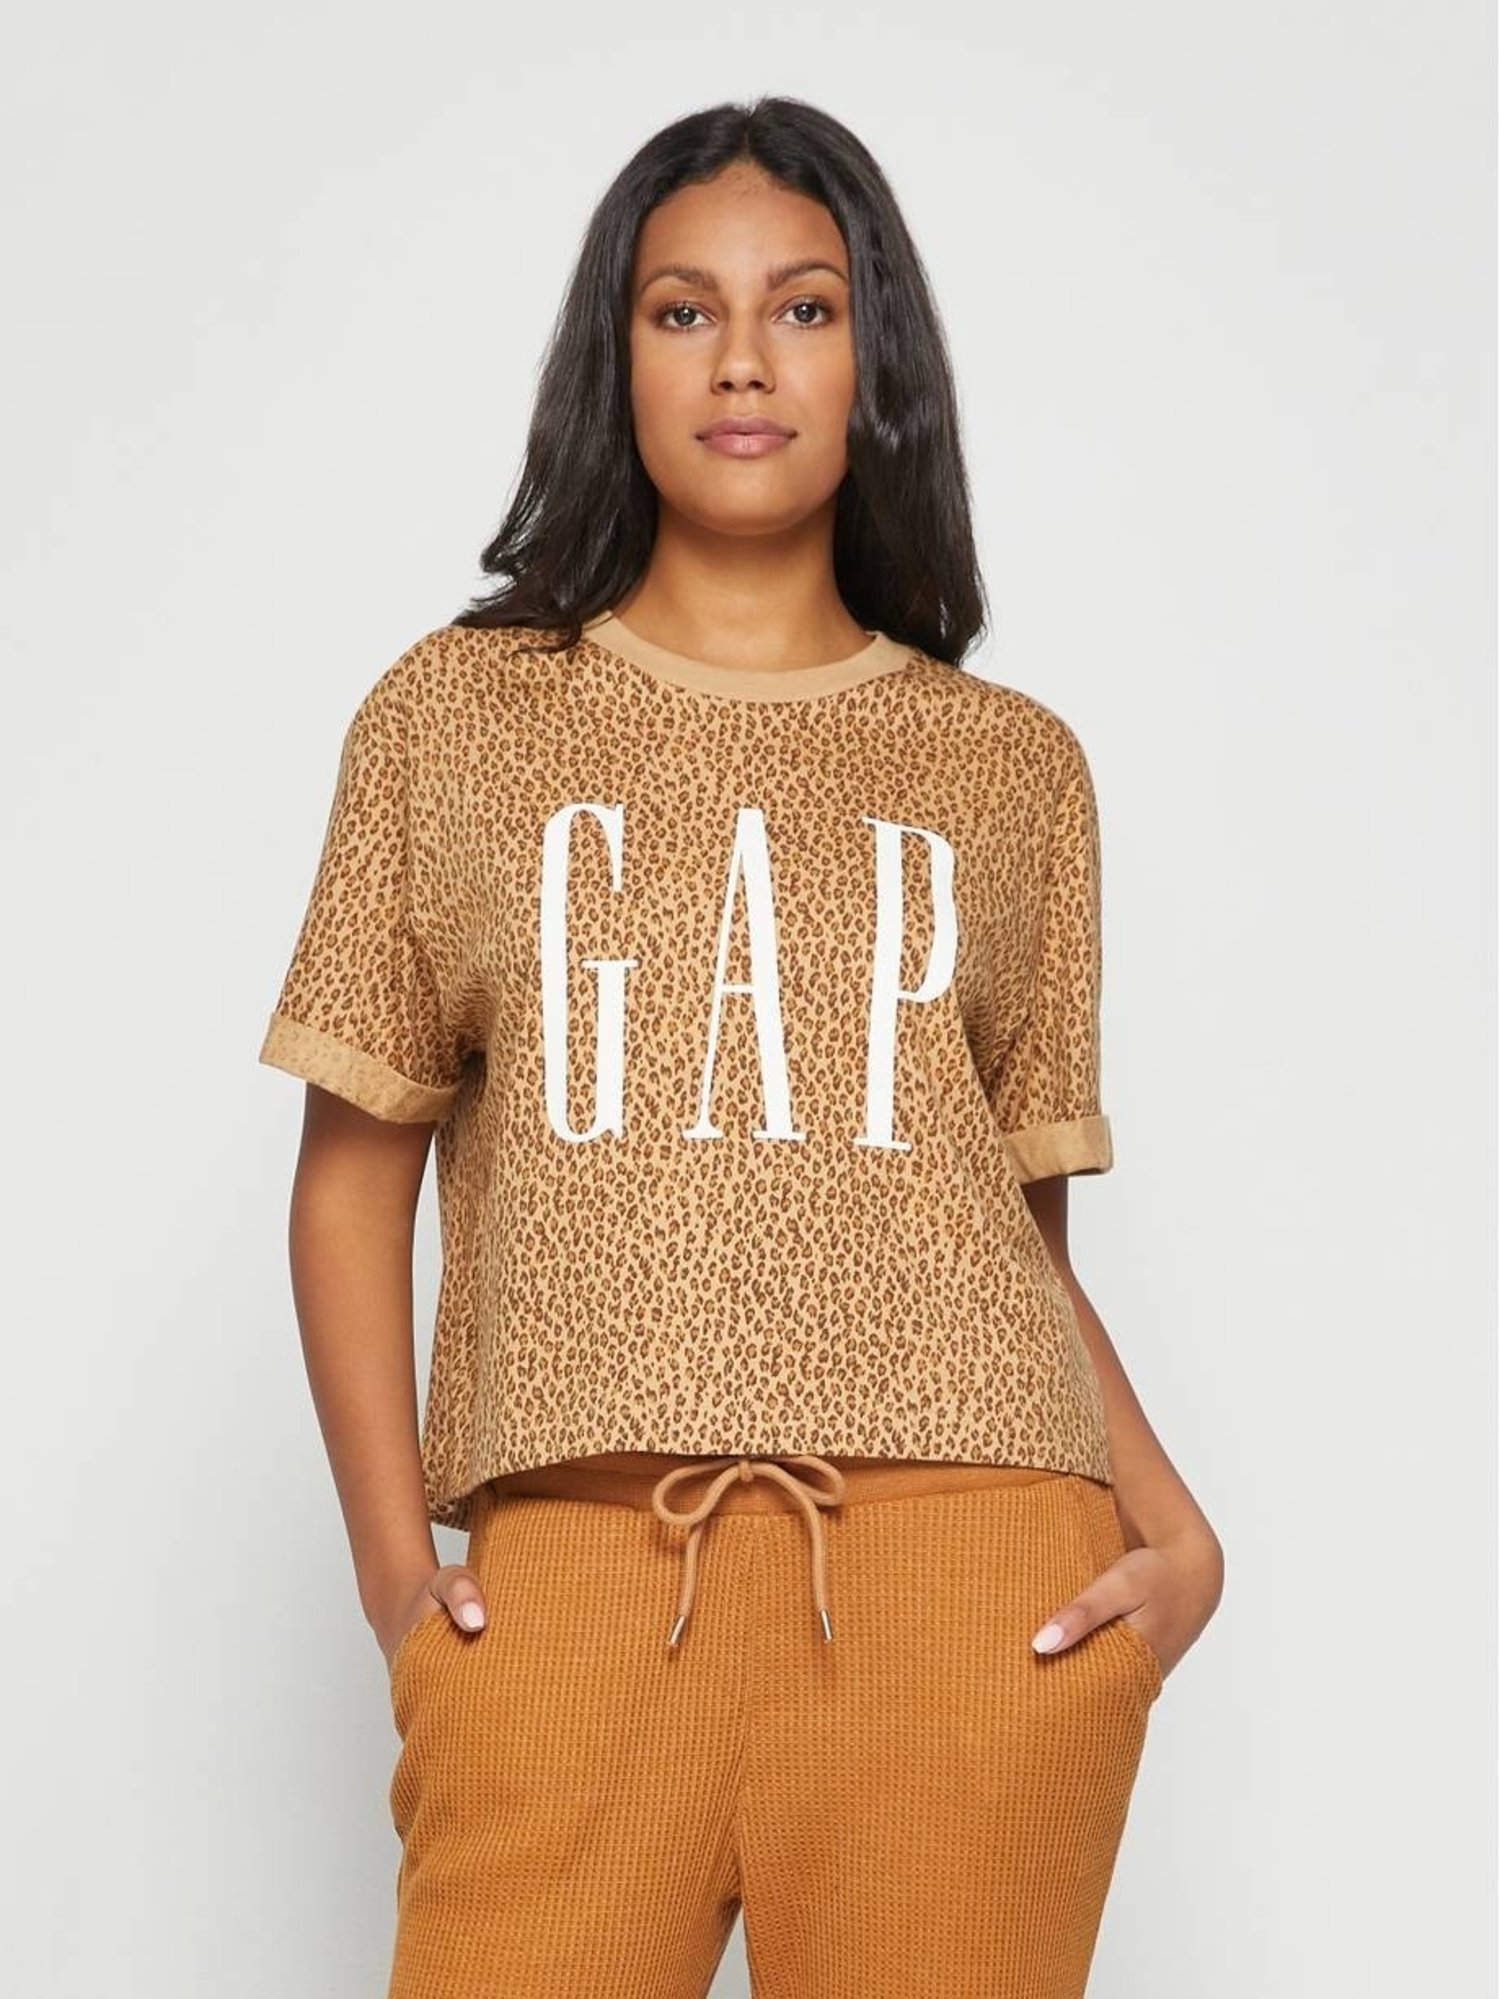 Gap Logo Crop T-Shirt product image